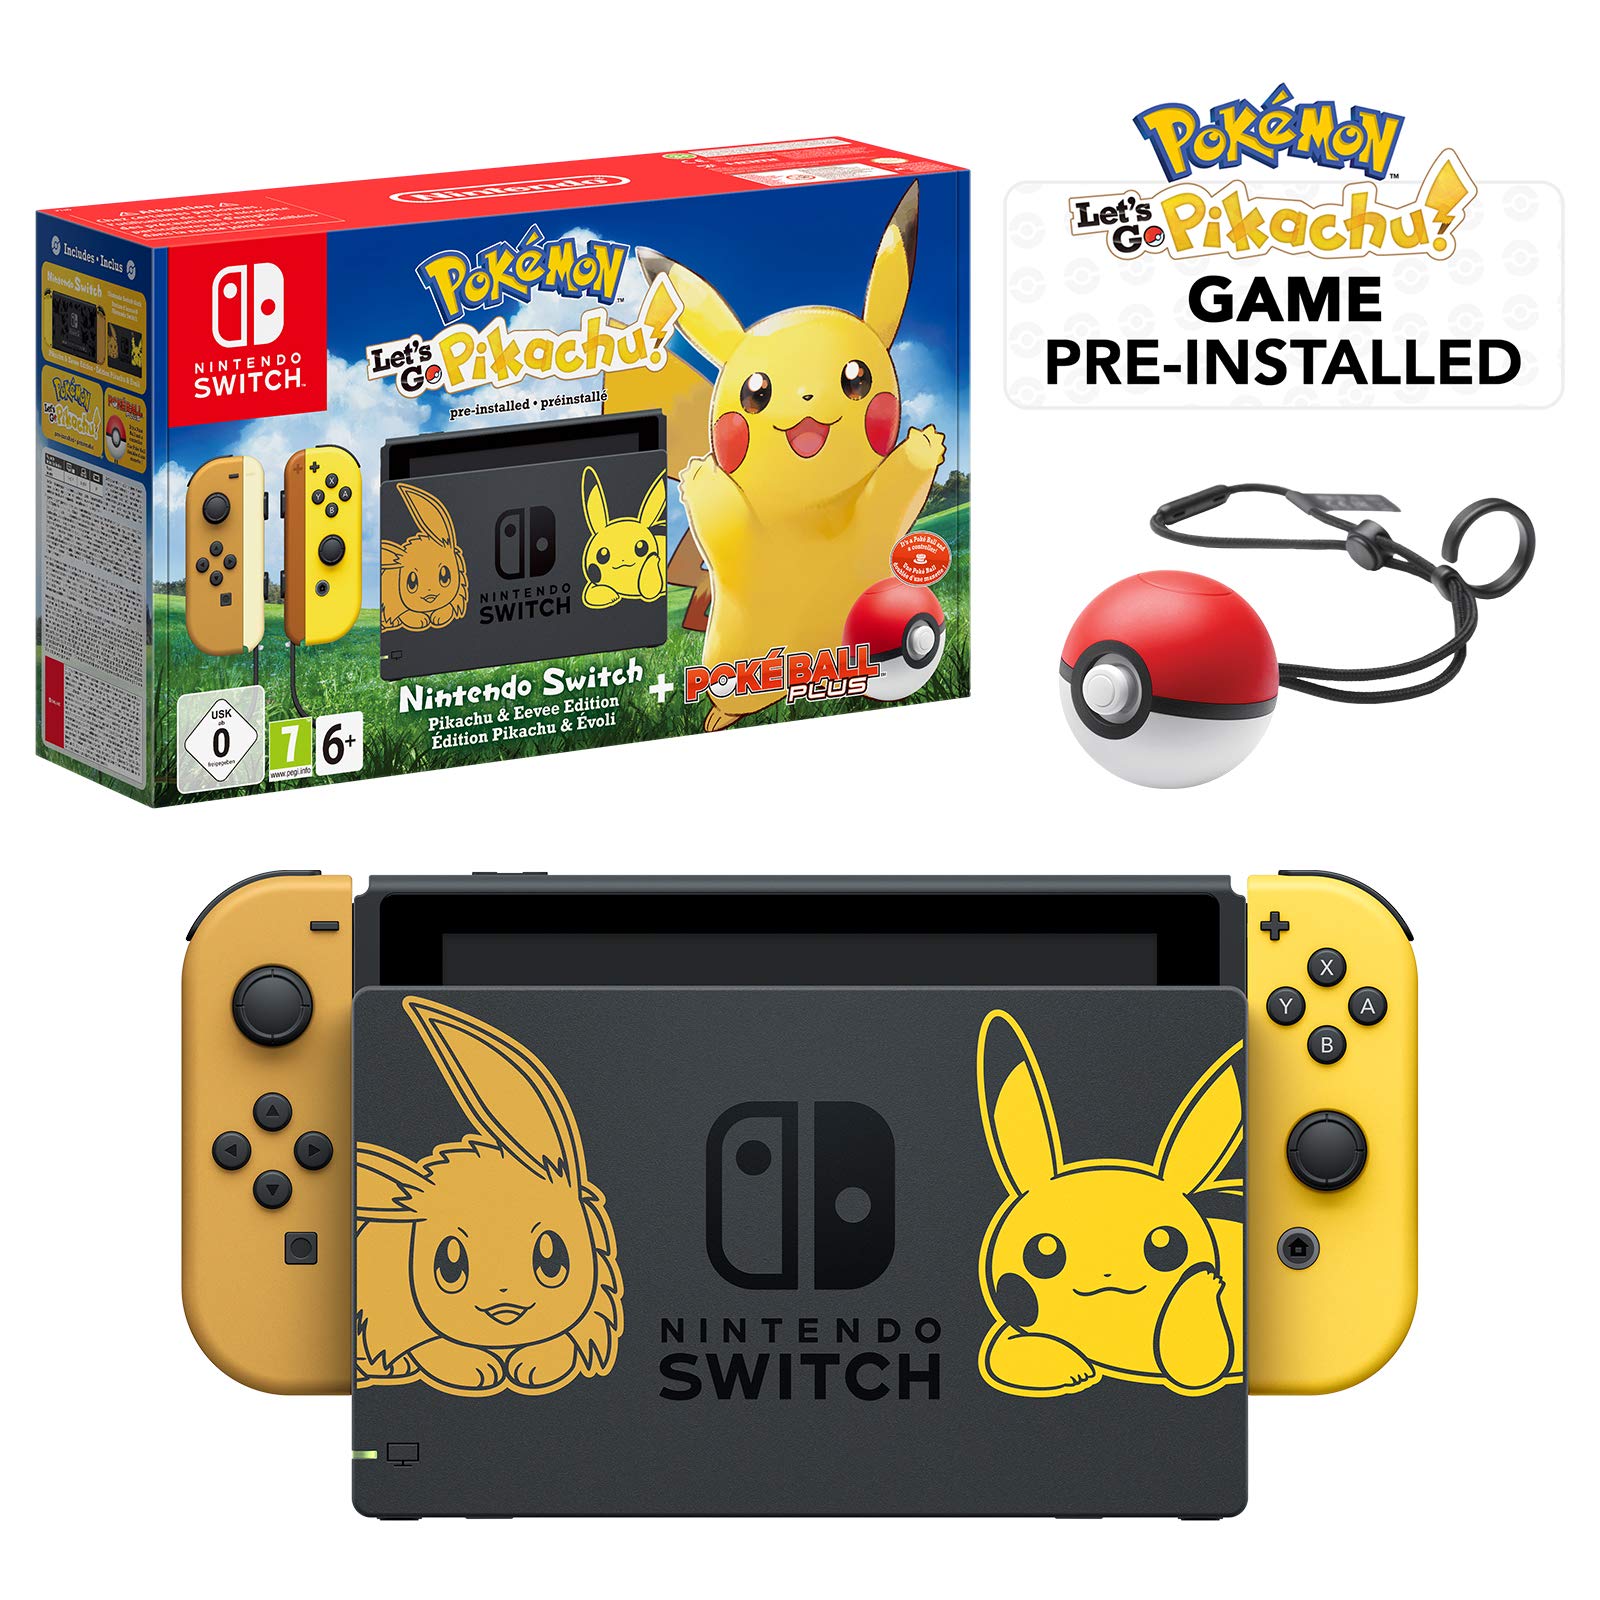 Go nintendo switch. Nintendo Switch Let's go Pikachu Edition. Консоль Нинтендо свитч покемоны. Нинтендо свитч Пикачу. Nintendo свитч издание Пикачу.